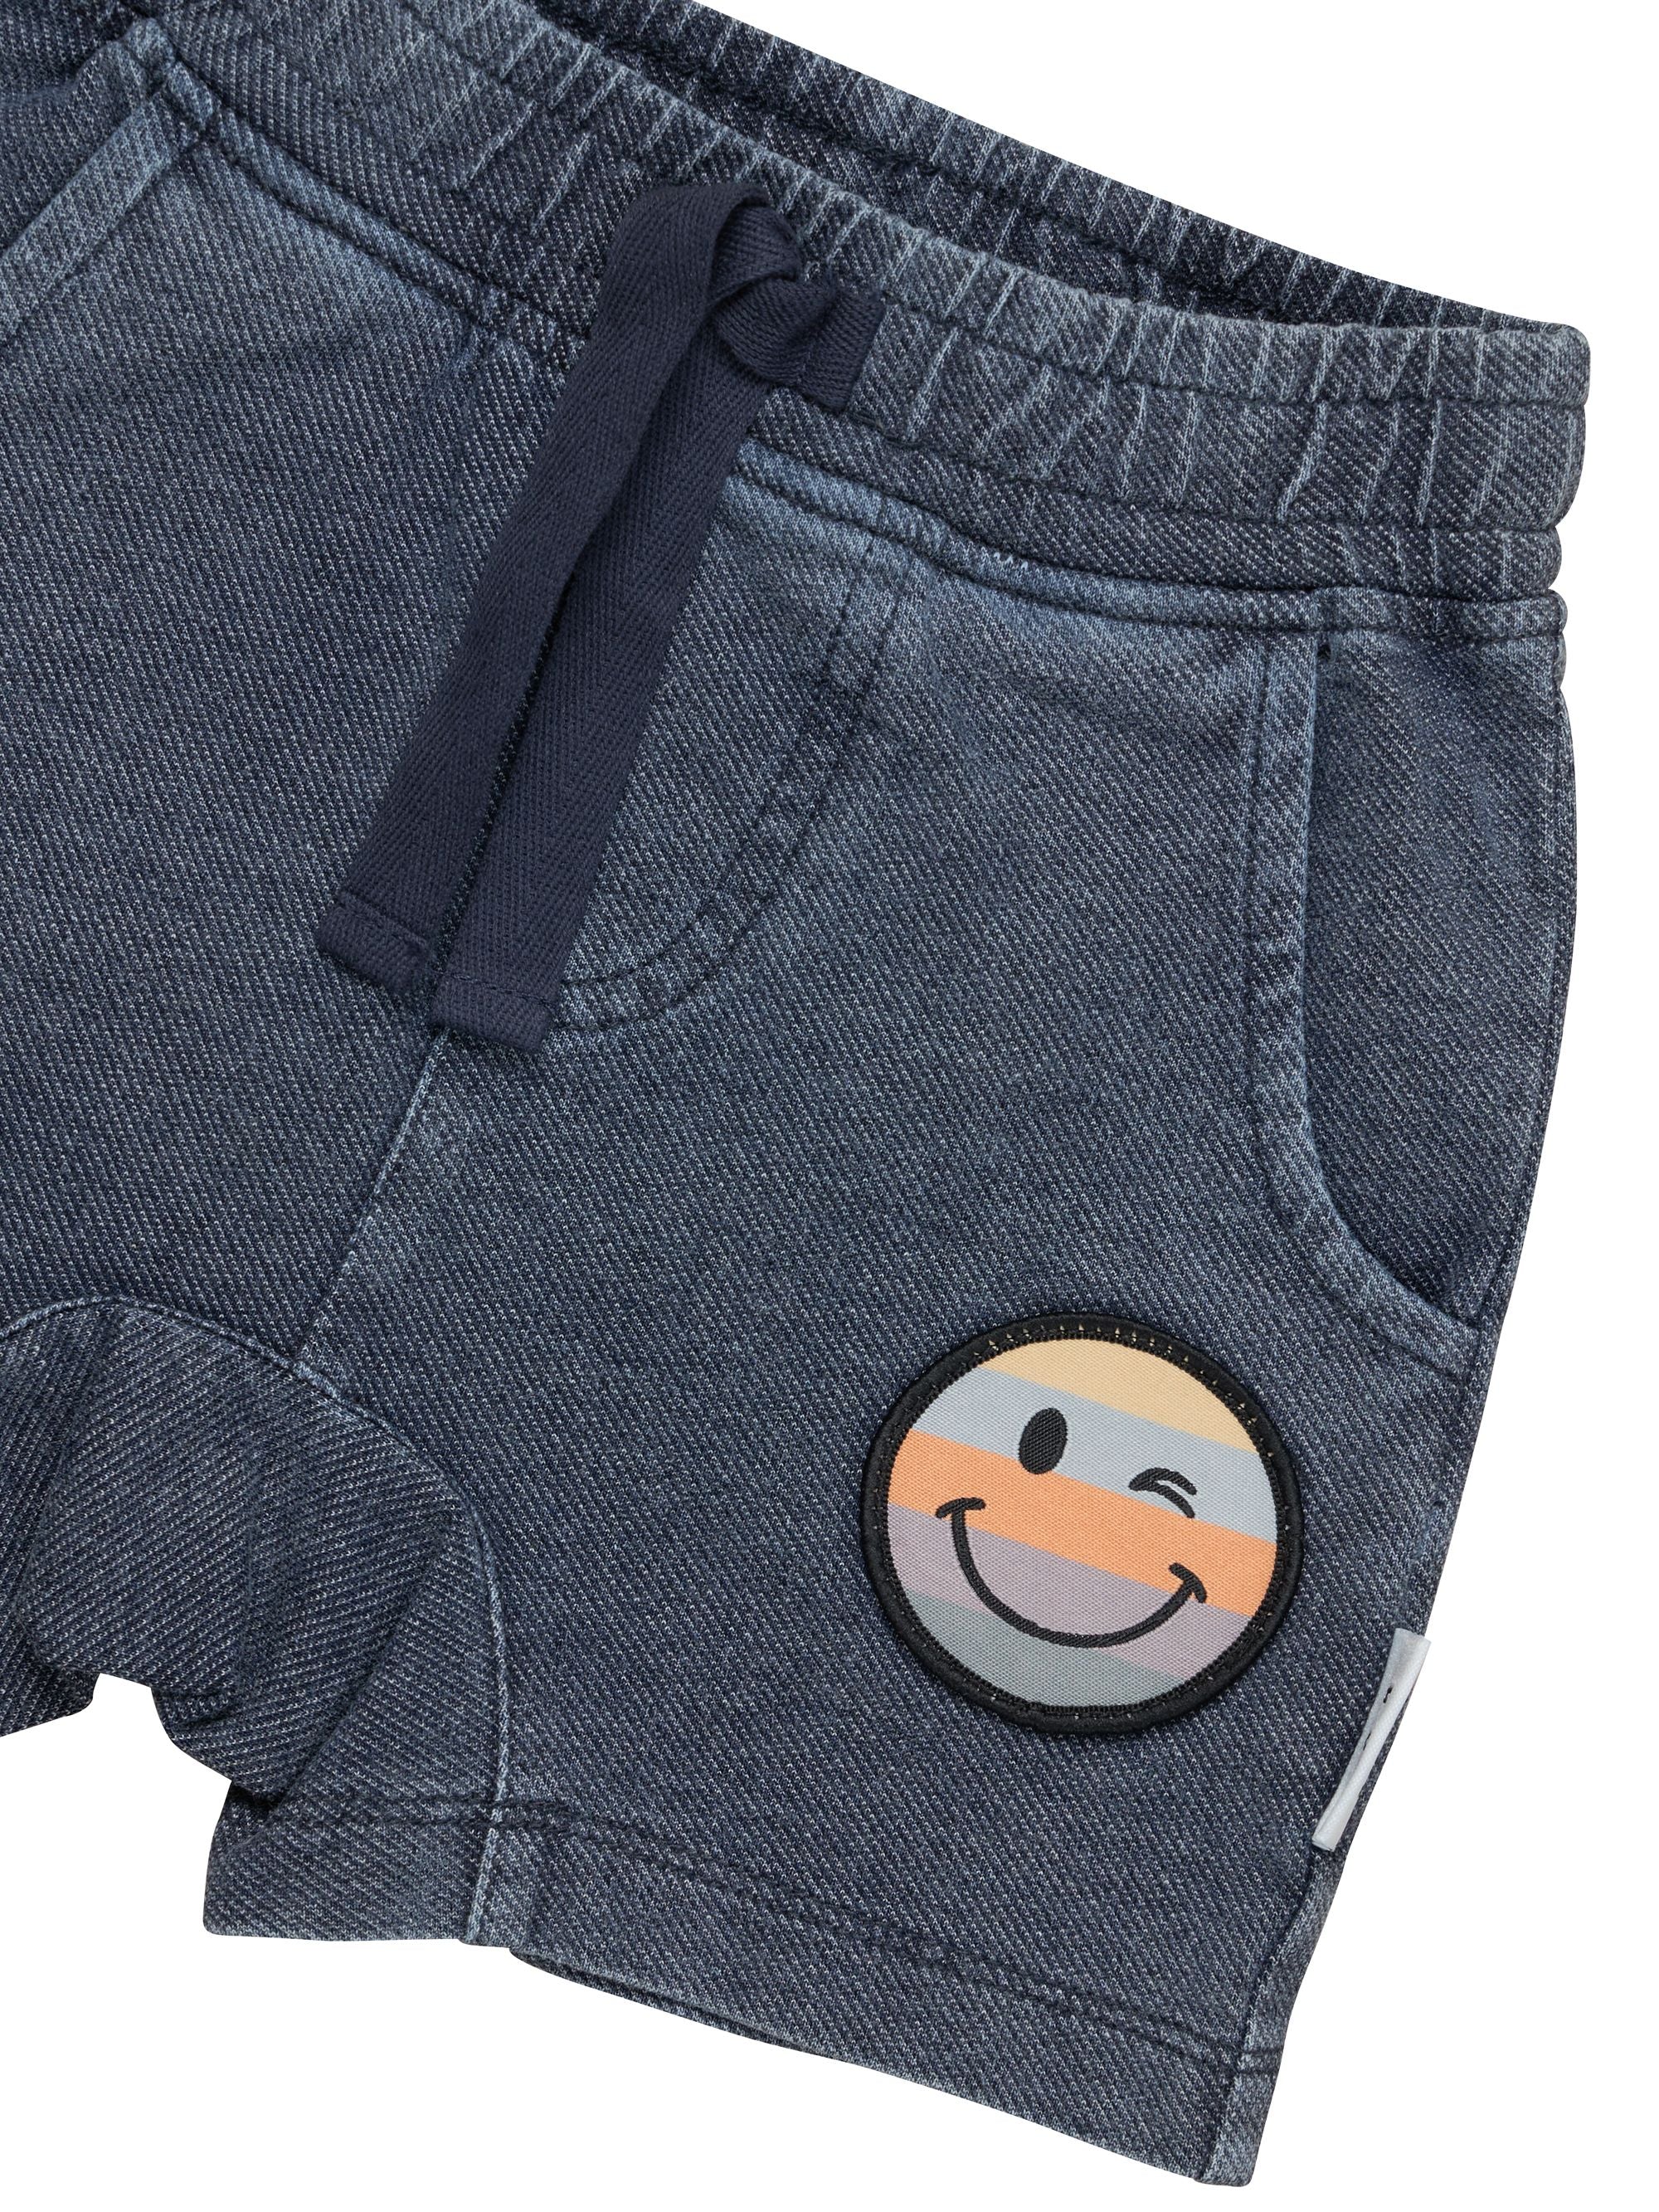 Huxbaby Slouch Shorts - Rainbow Smiley